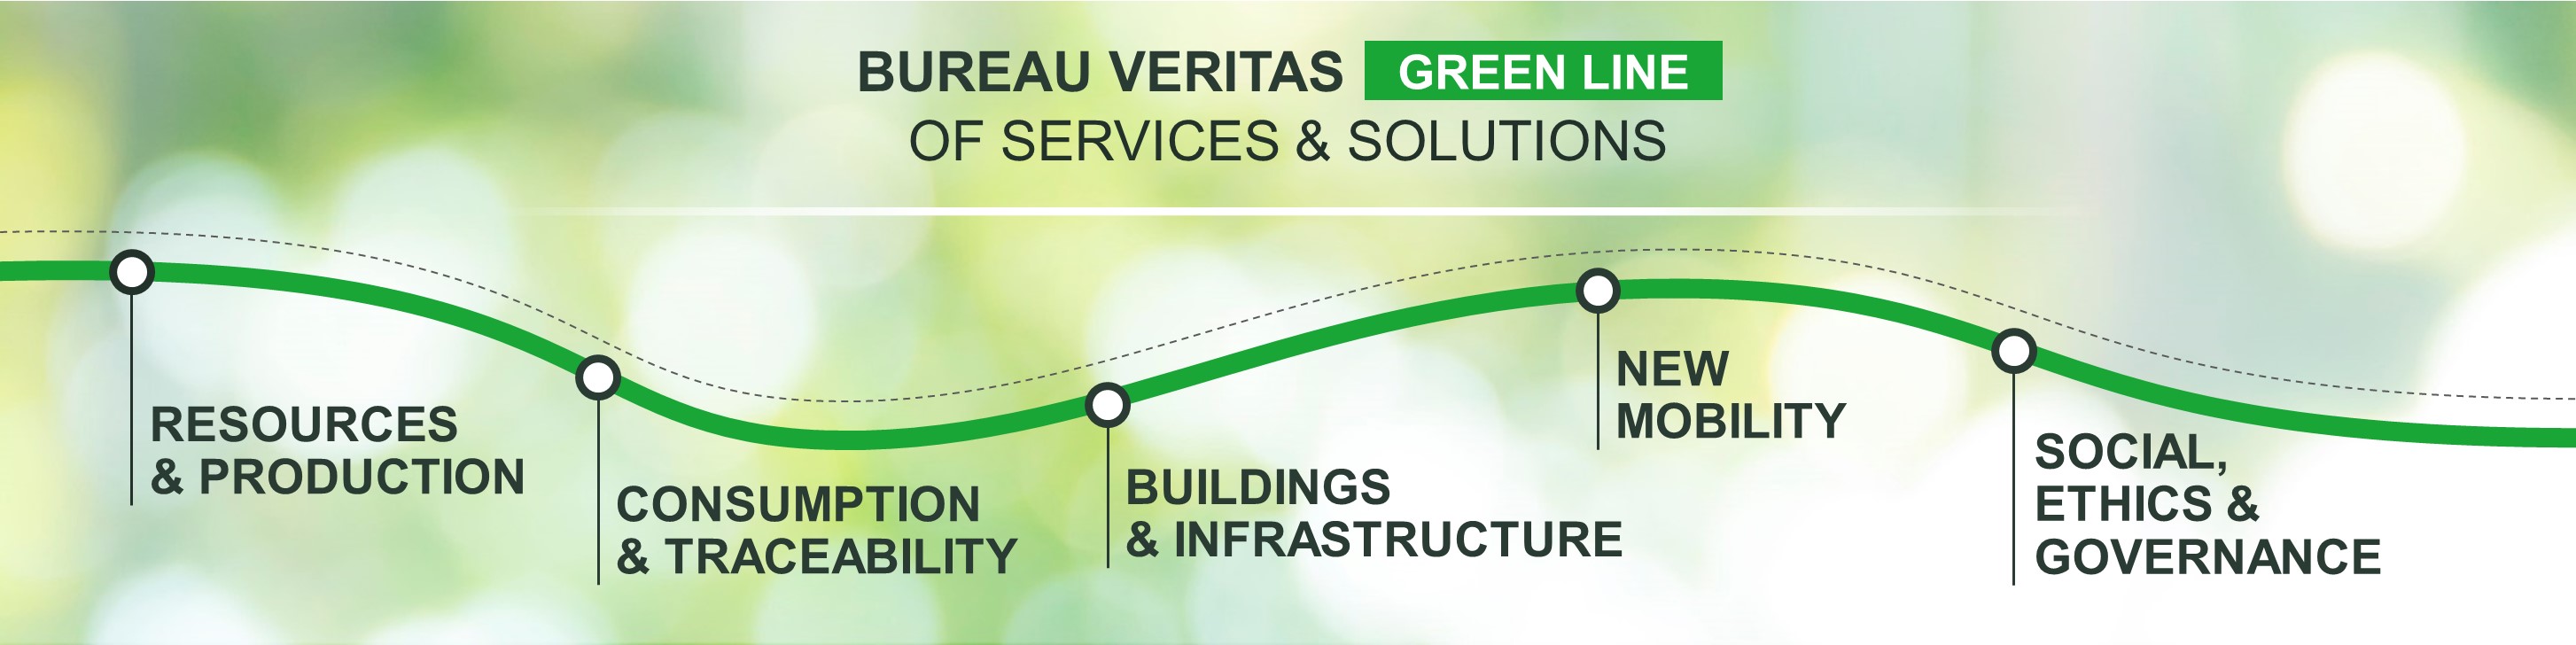 BV Green line_EN